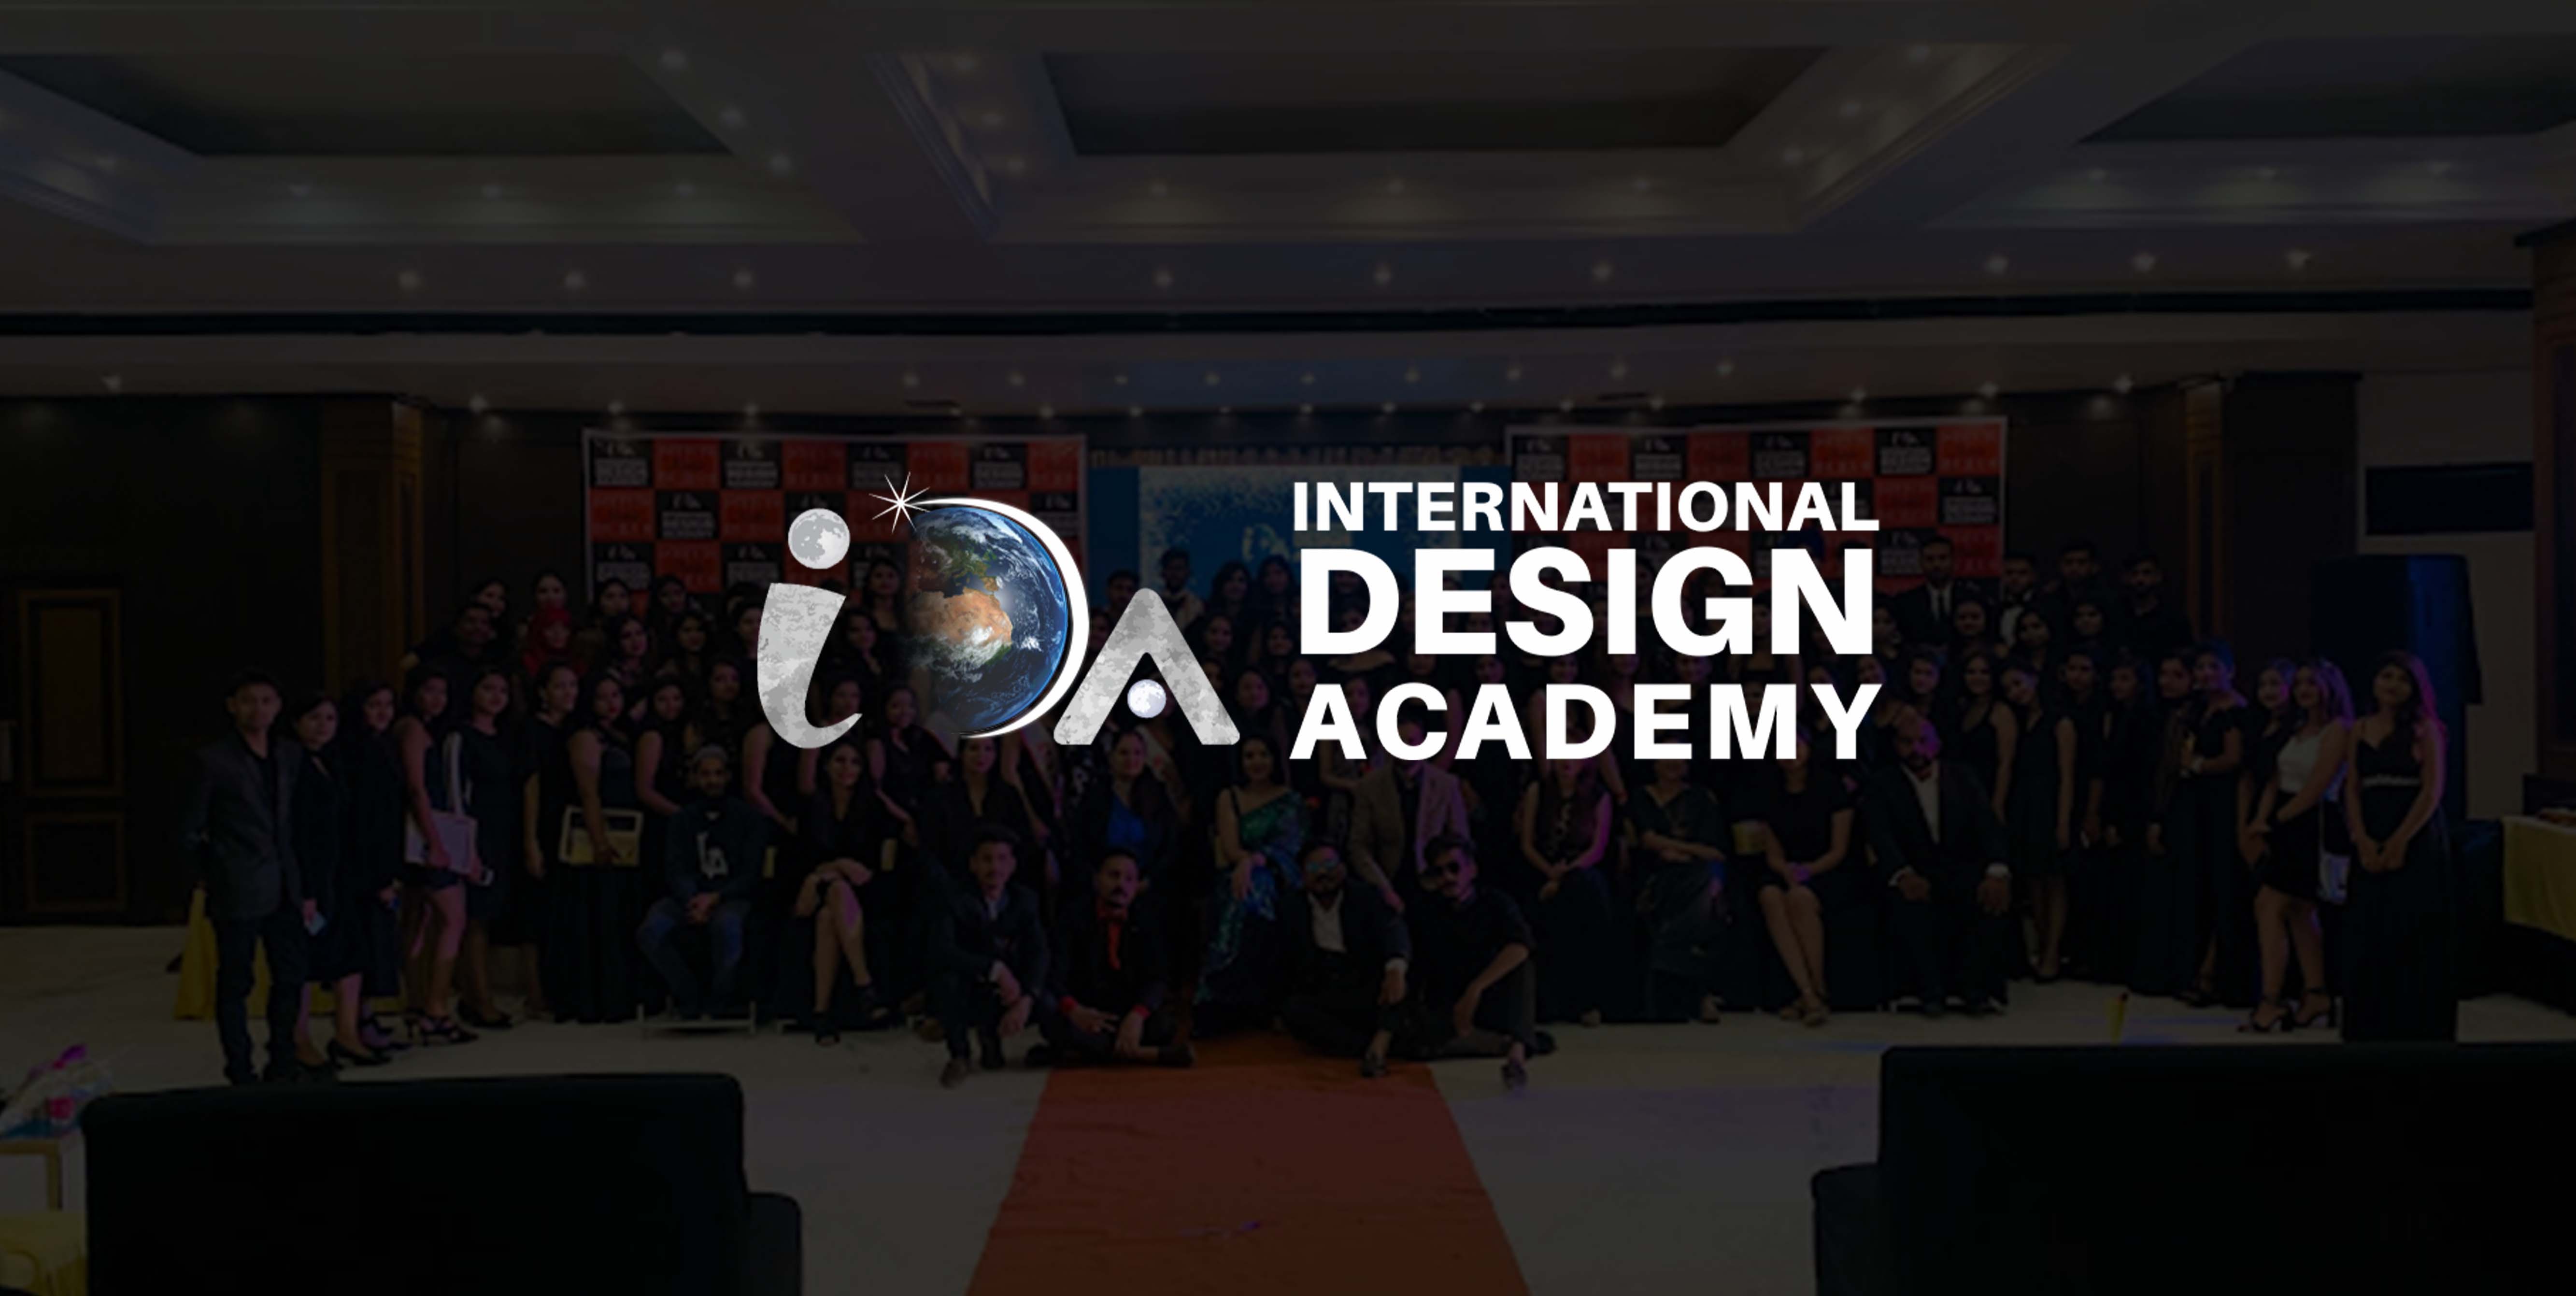 International Desing Academy